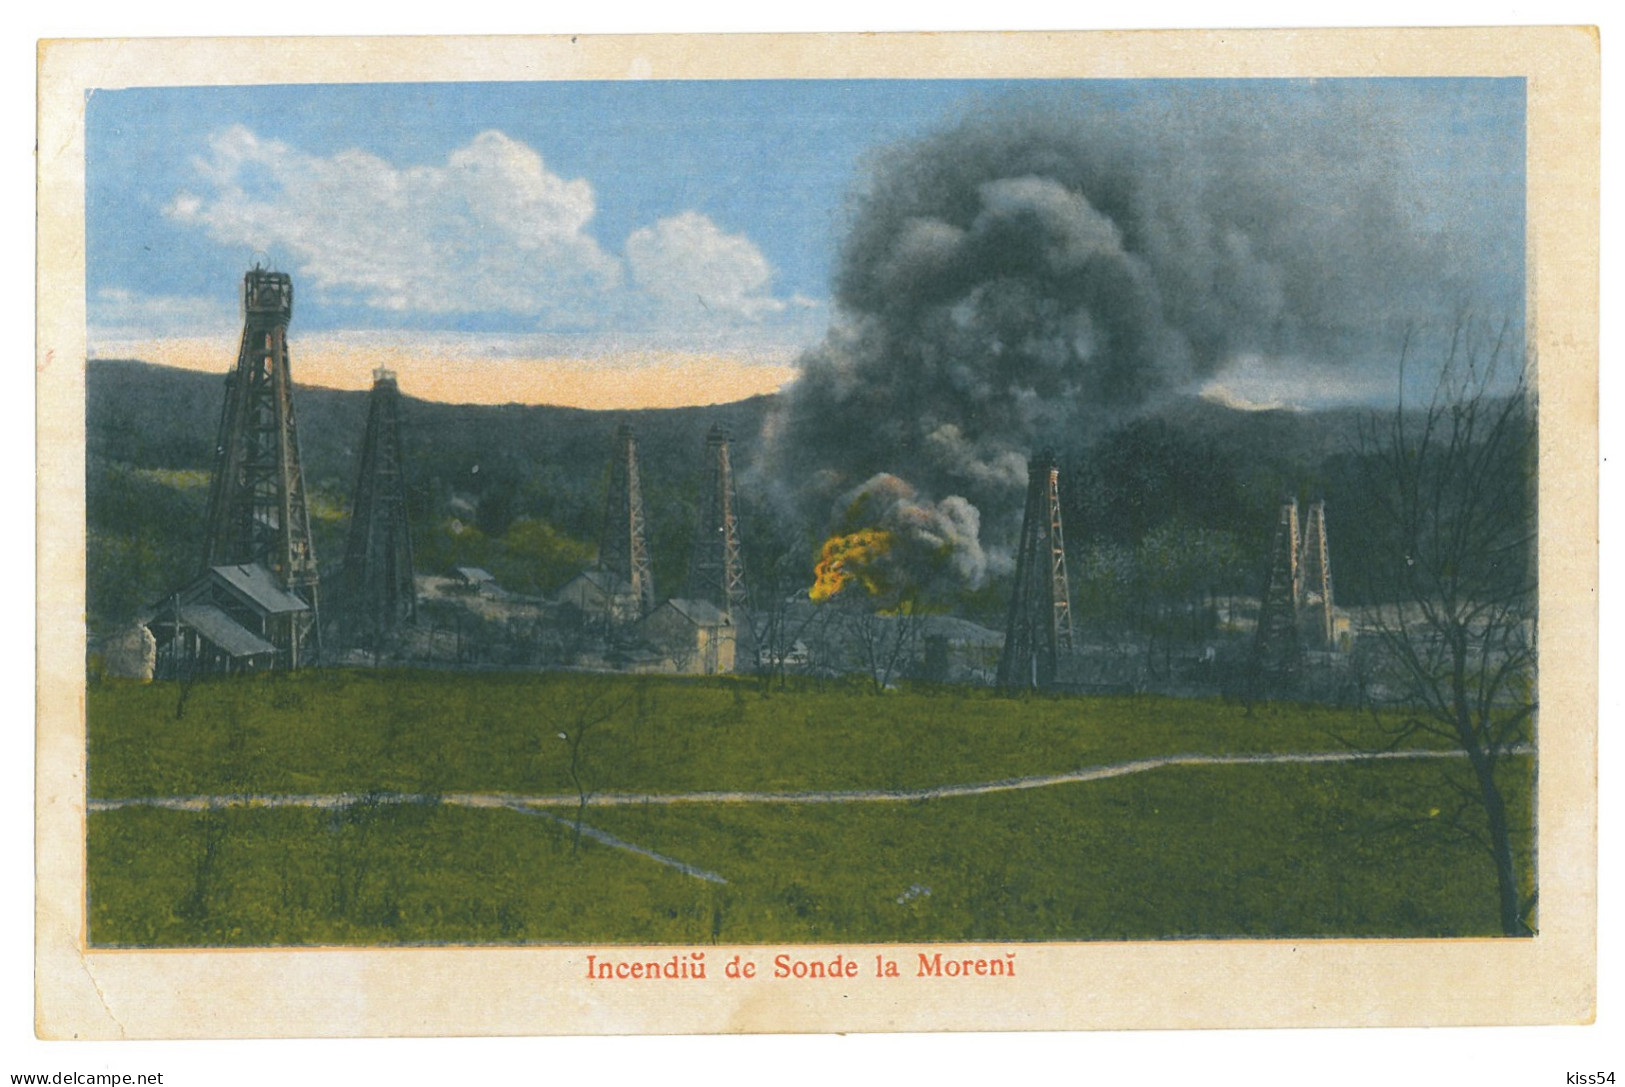 RO 09 - 22648 MORENI, Dambovita, Fire At The Oil Wells, Romania - Old Postcard - Unused - Rumänien